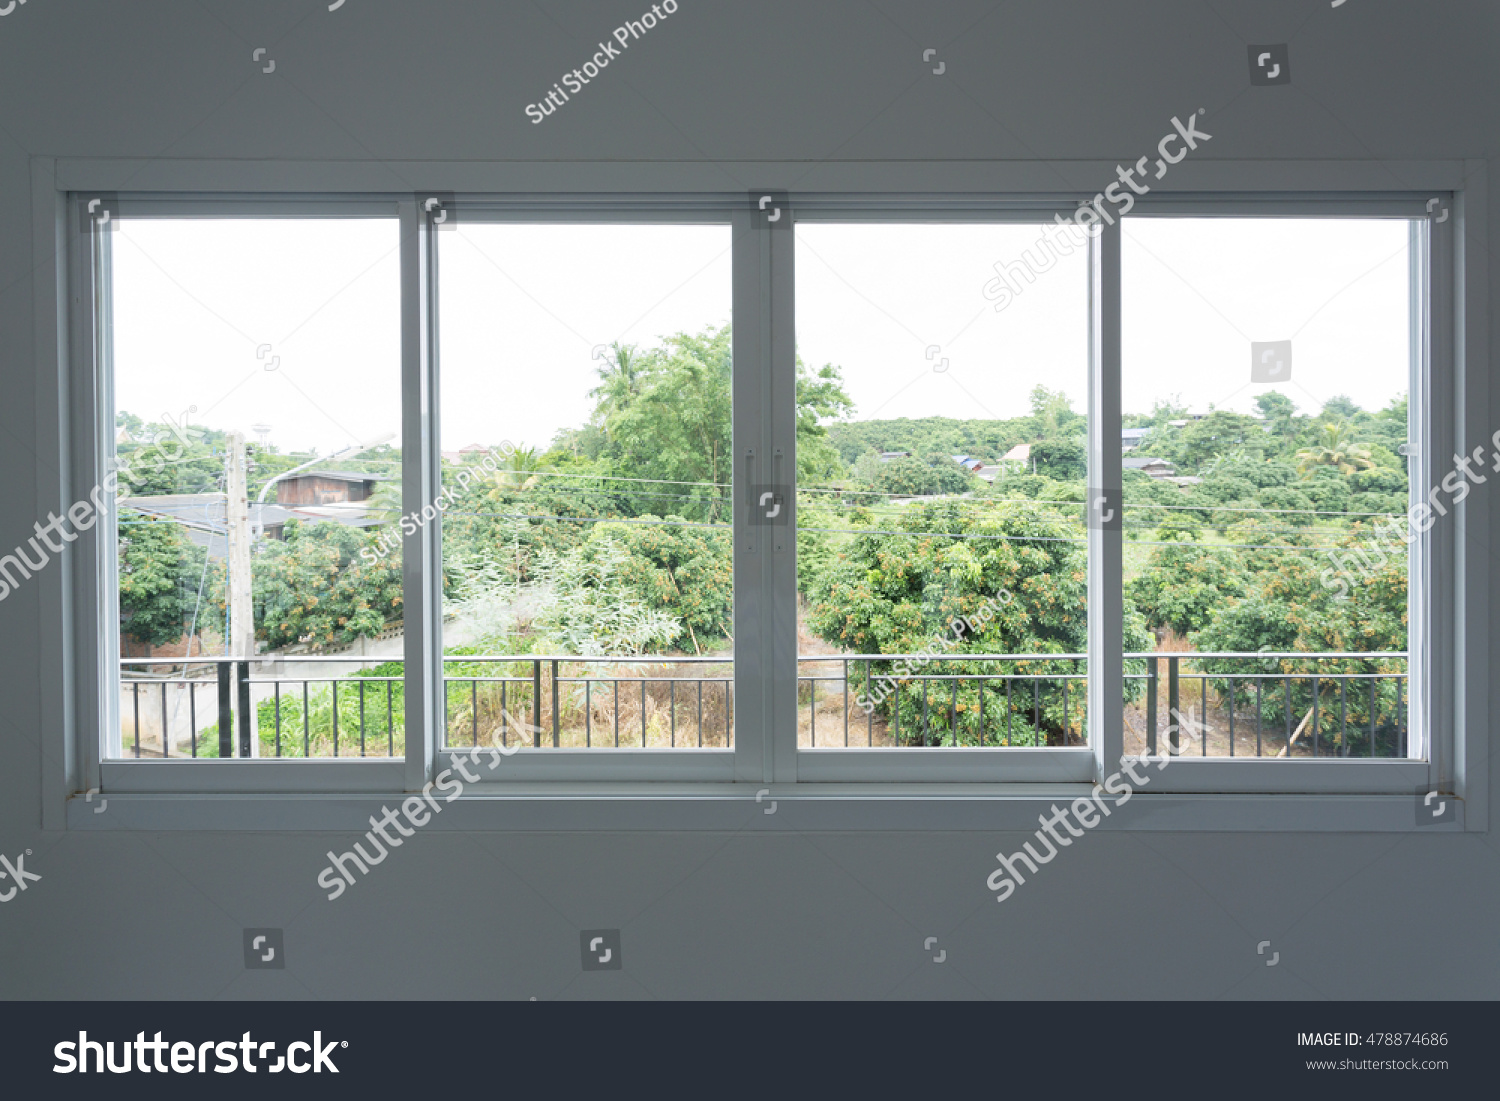 Glass Window Sliding On White Wall Stock Photo 478874686 - Shutterstock